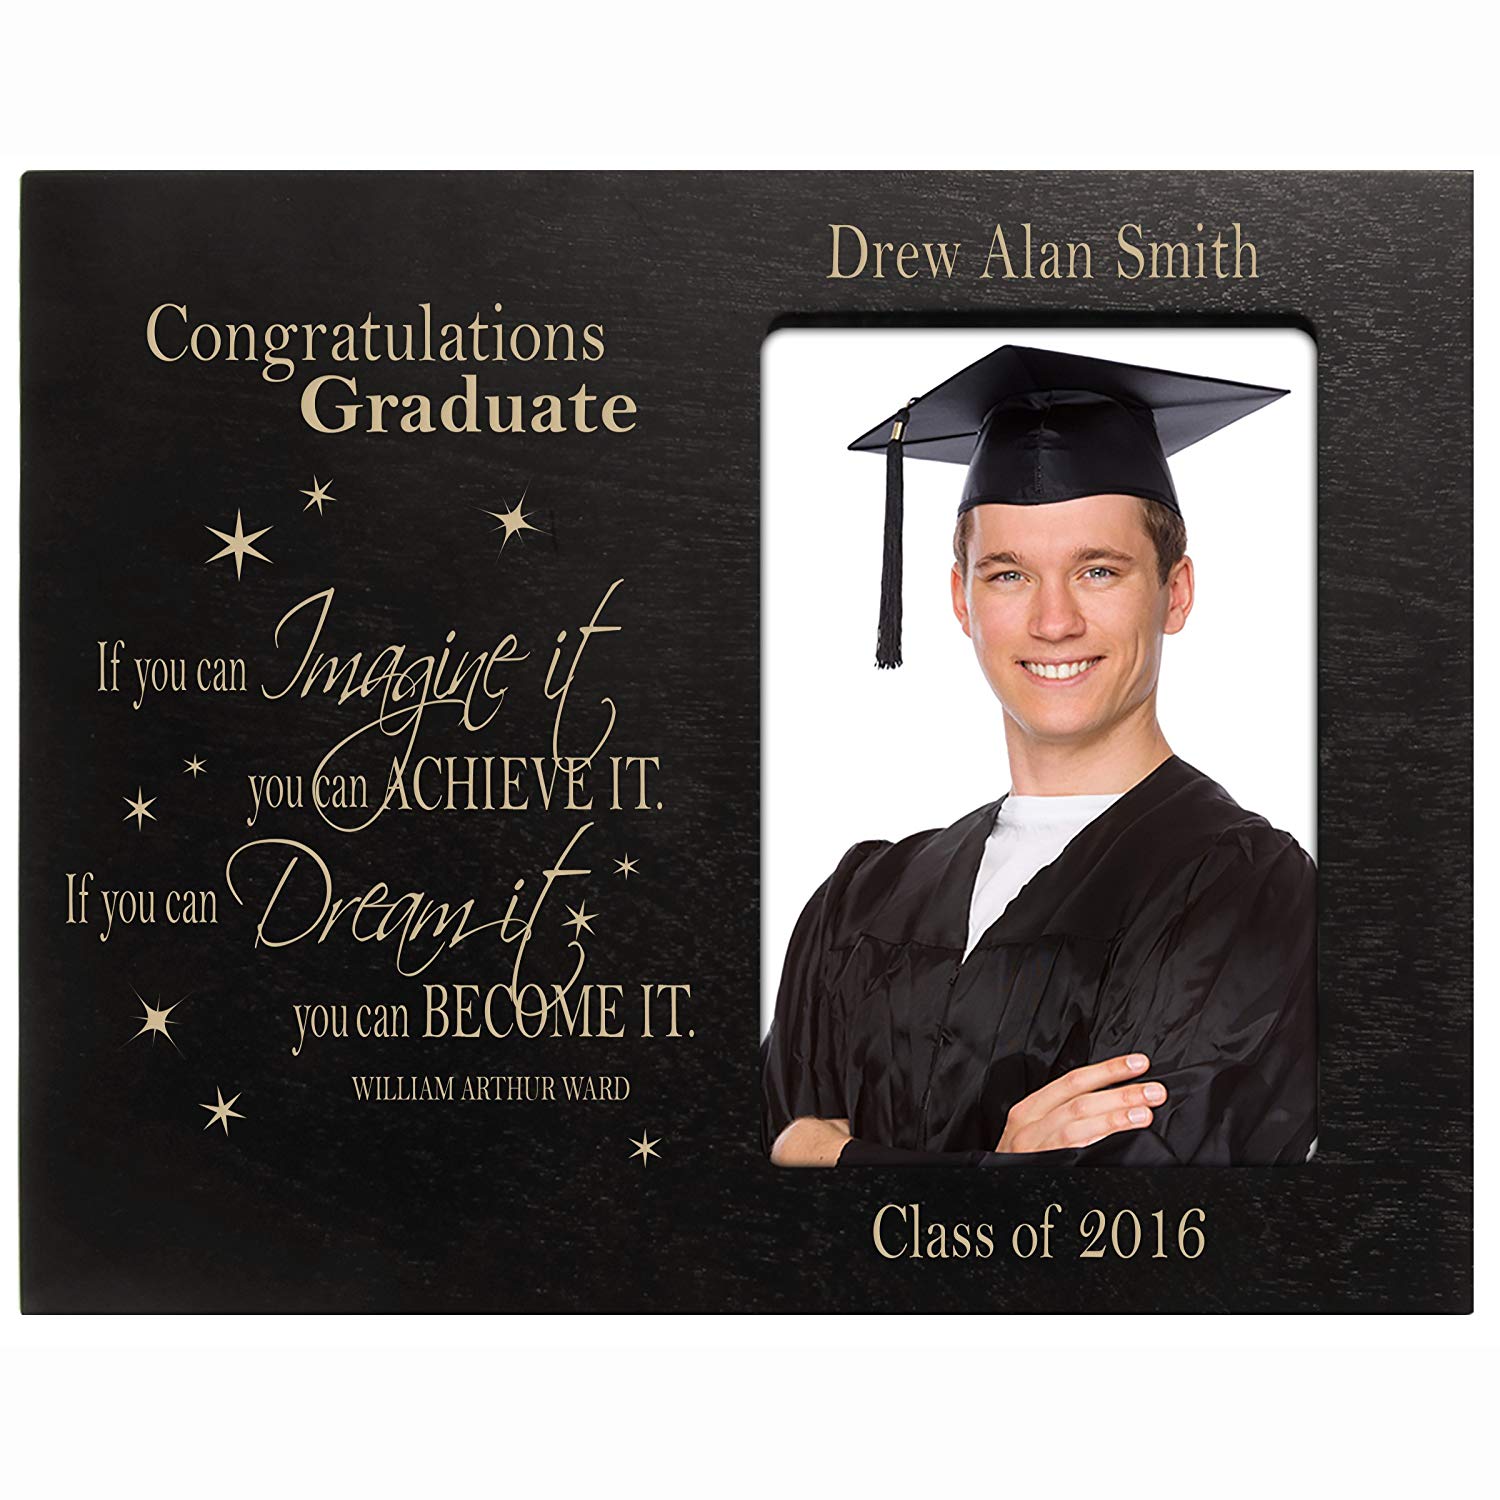 Personalized Graduation Picture Frame Gift - Congratulations Graduate - LifeSong Milestones